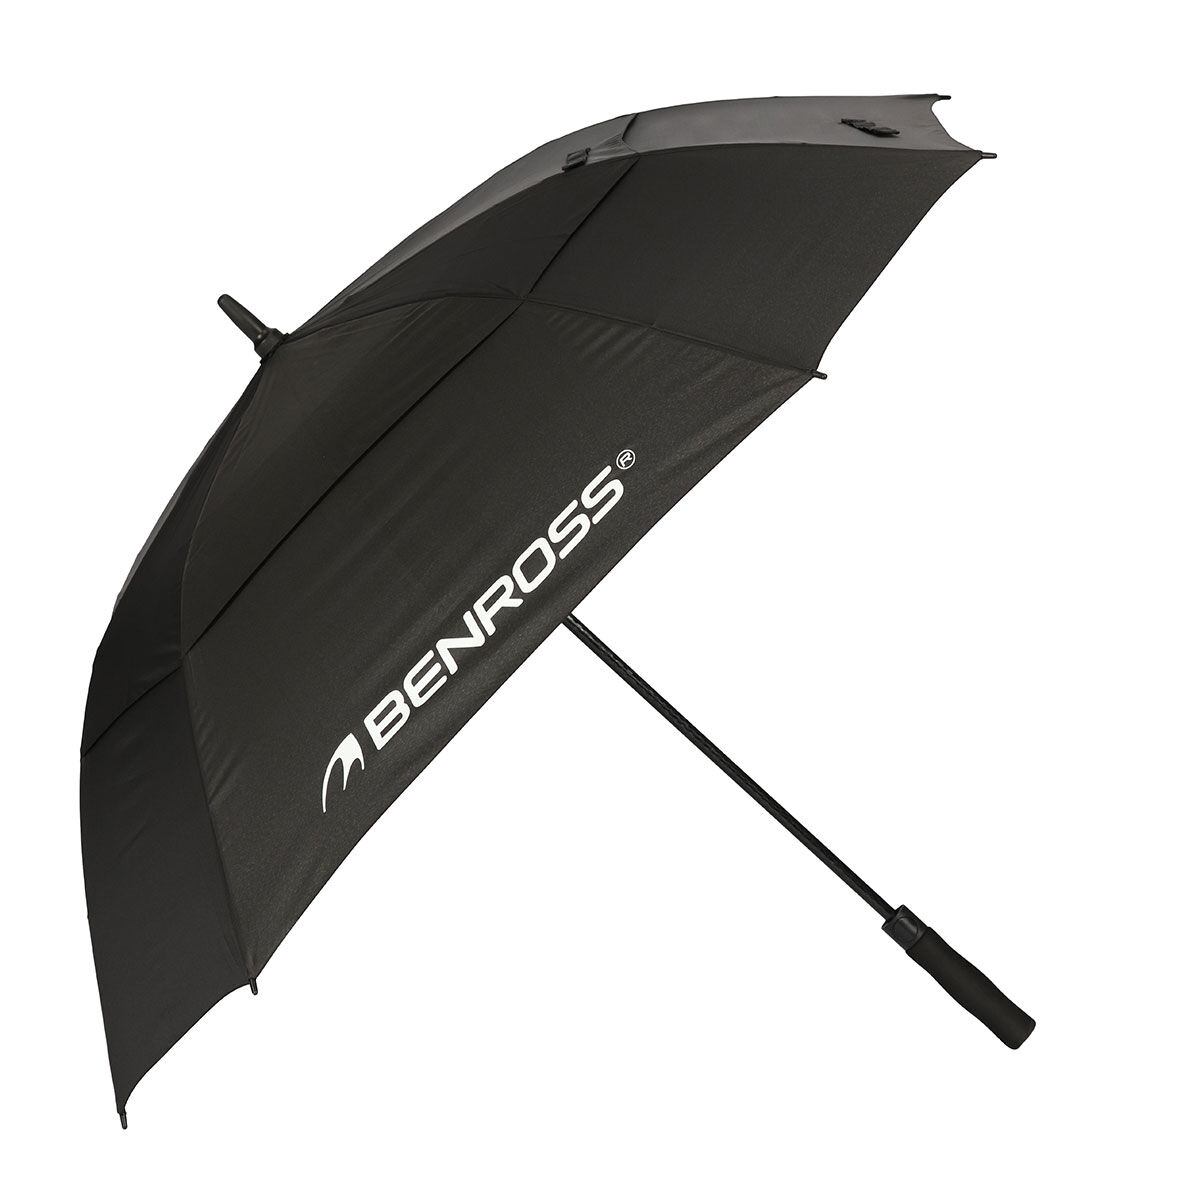 Benross Square Golf Umbrella, Mens, Black, 62 inches | American Golf von Benross